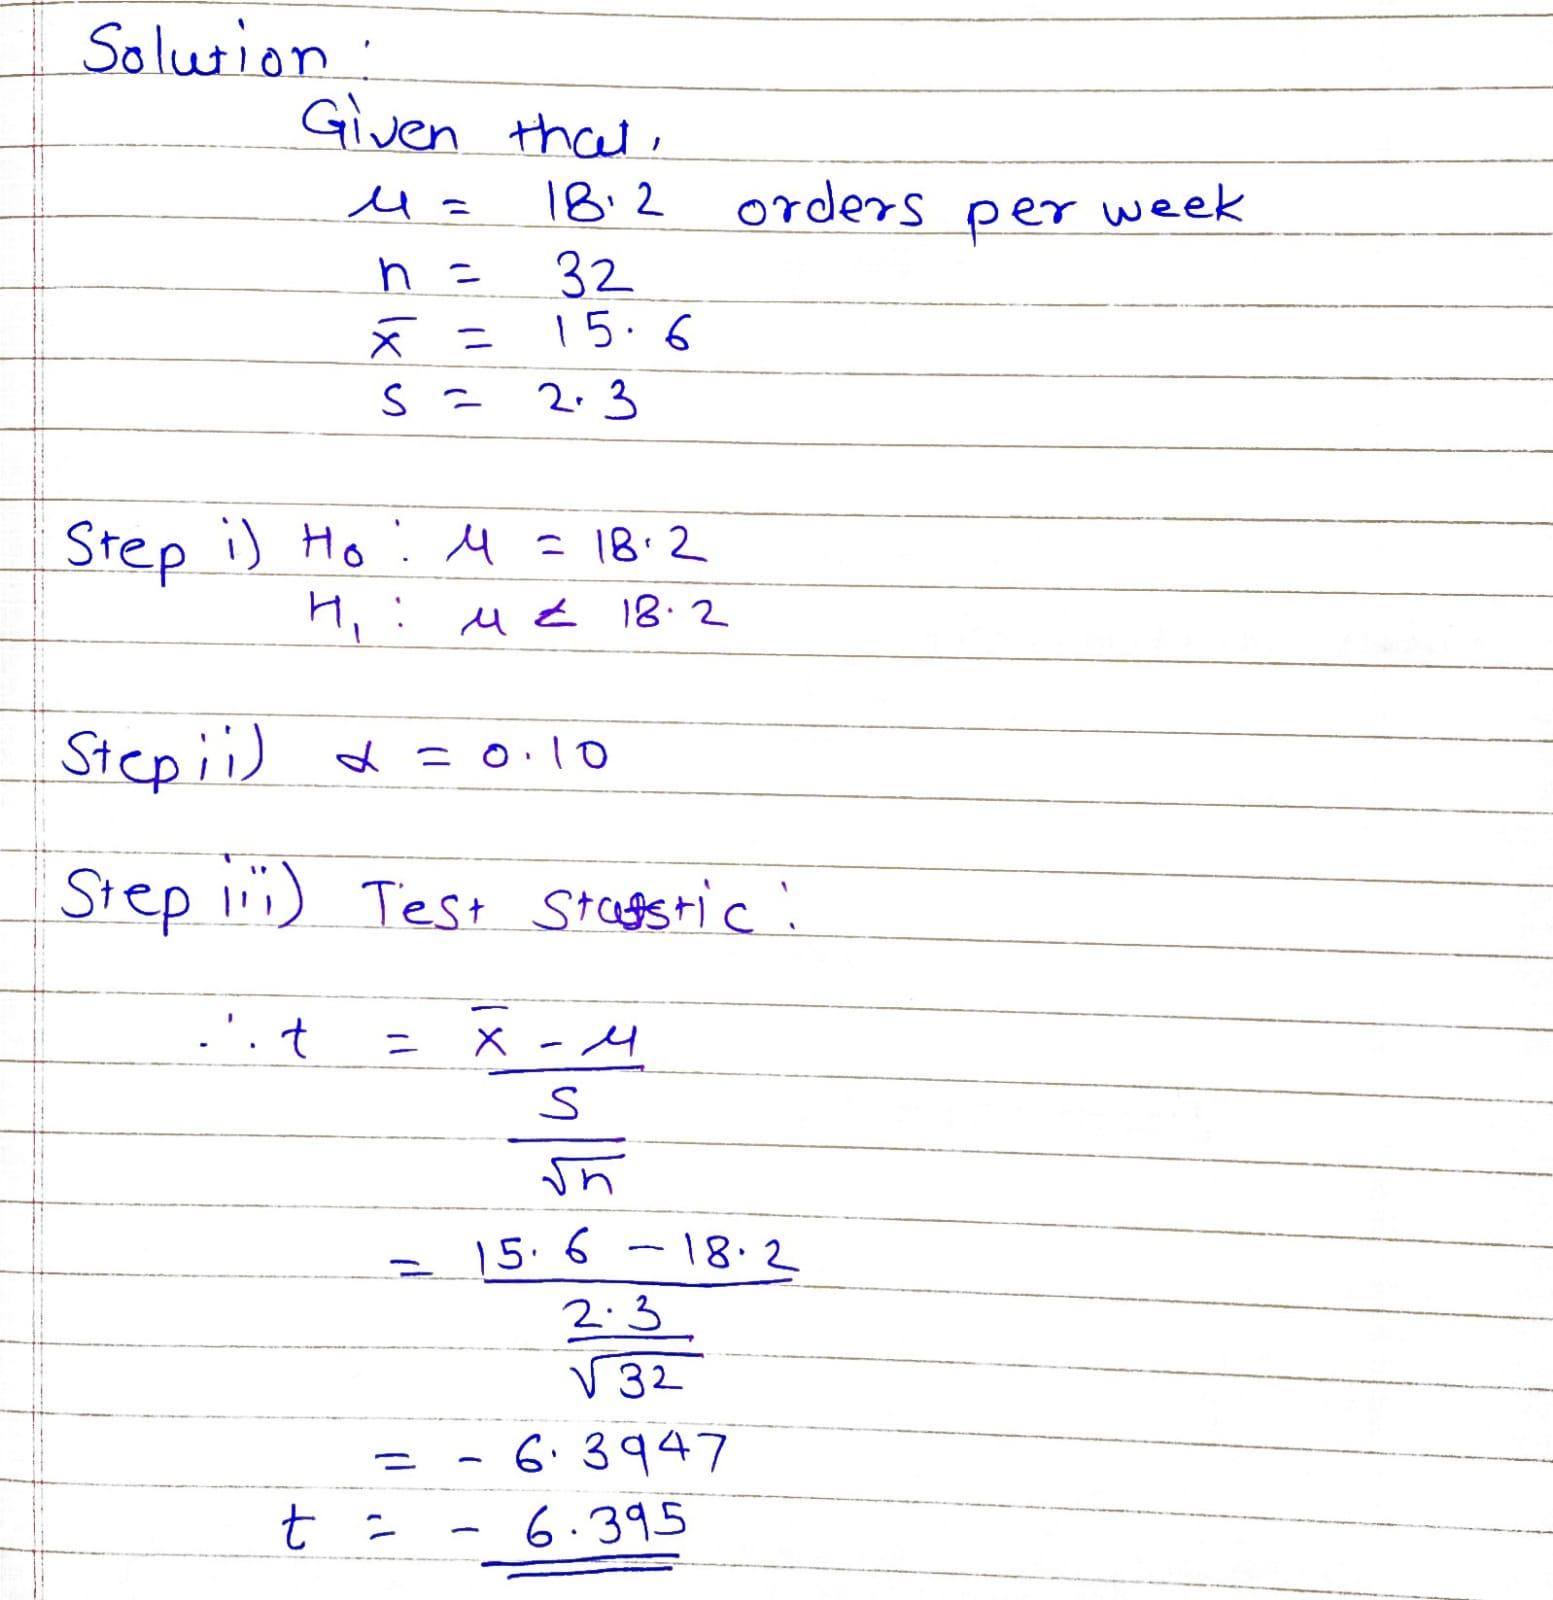 Solution : Given that u= 18:2 orders per week h = X = s- 32 15.6 2.3 4 = 18.2 Step i) Ho H. ut 18.2 Step ; i) a=0.10 Step 1 )